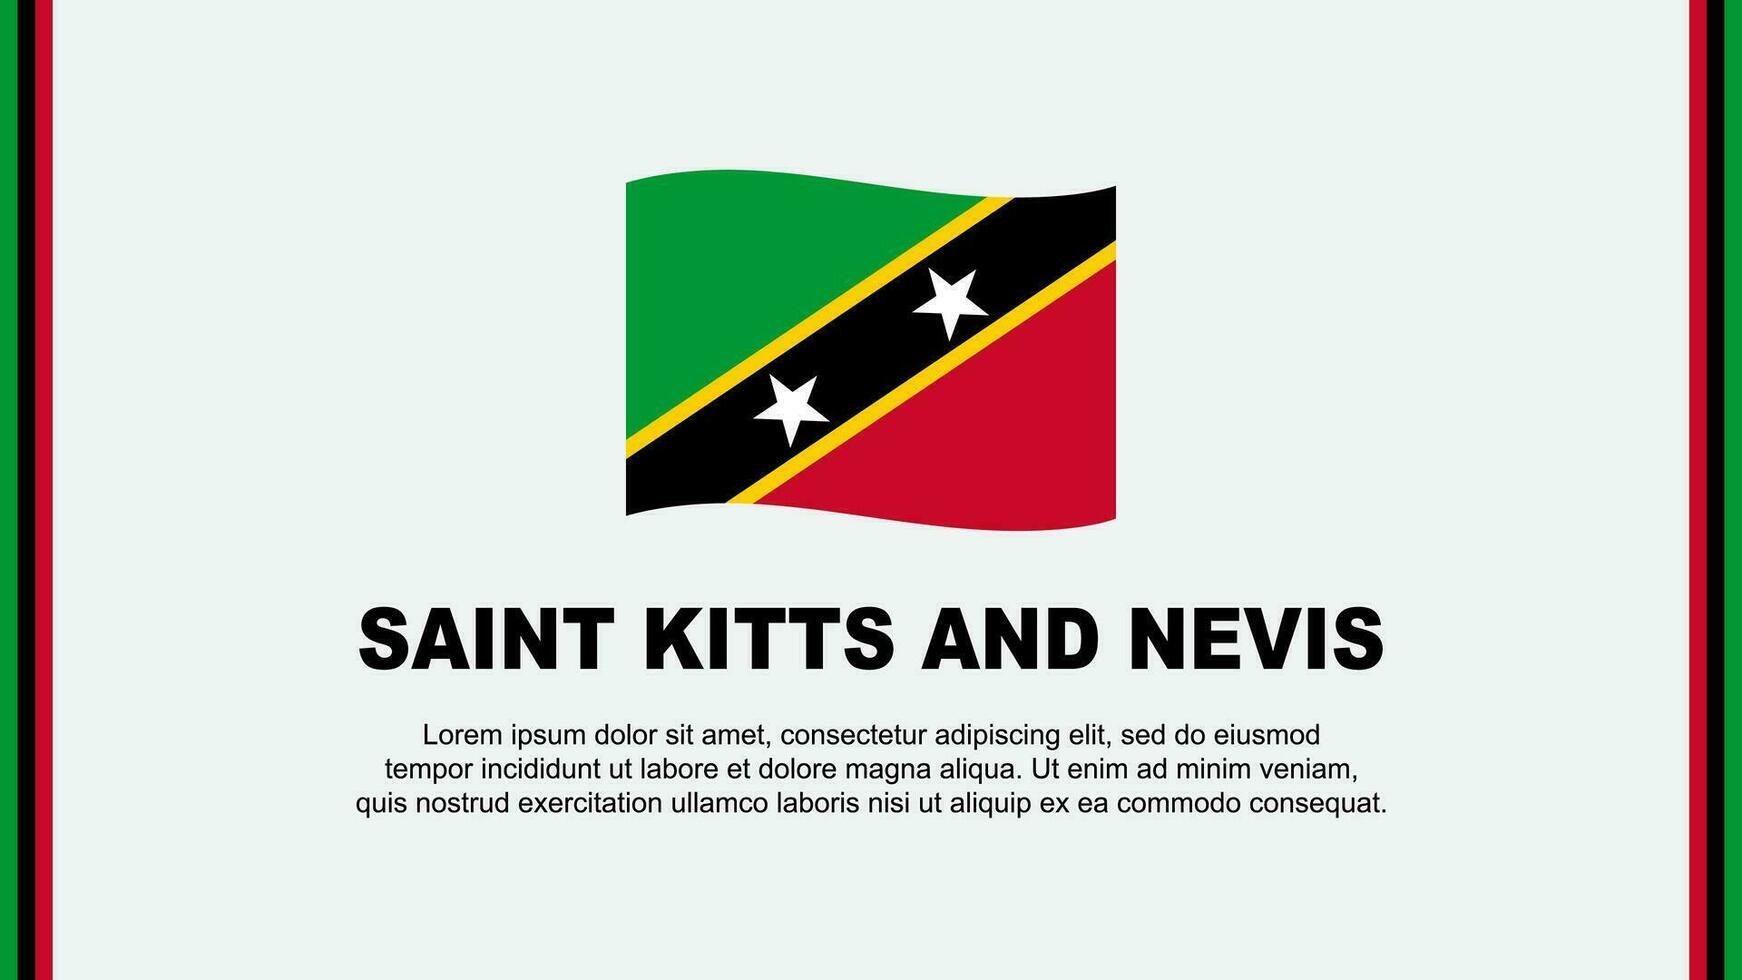 Saint Kitts And Nevis Flag Abstract Background Design Template. Saint Kitts And Nevis Independence Day Banner Social Media Vector Illustration. Cartoon